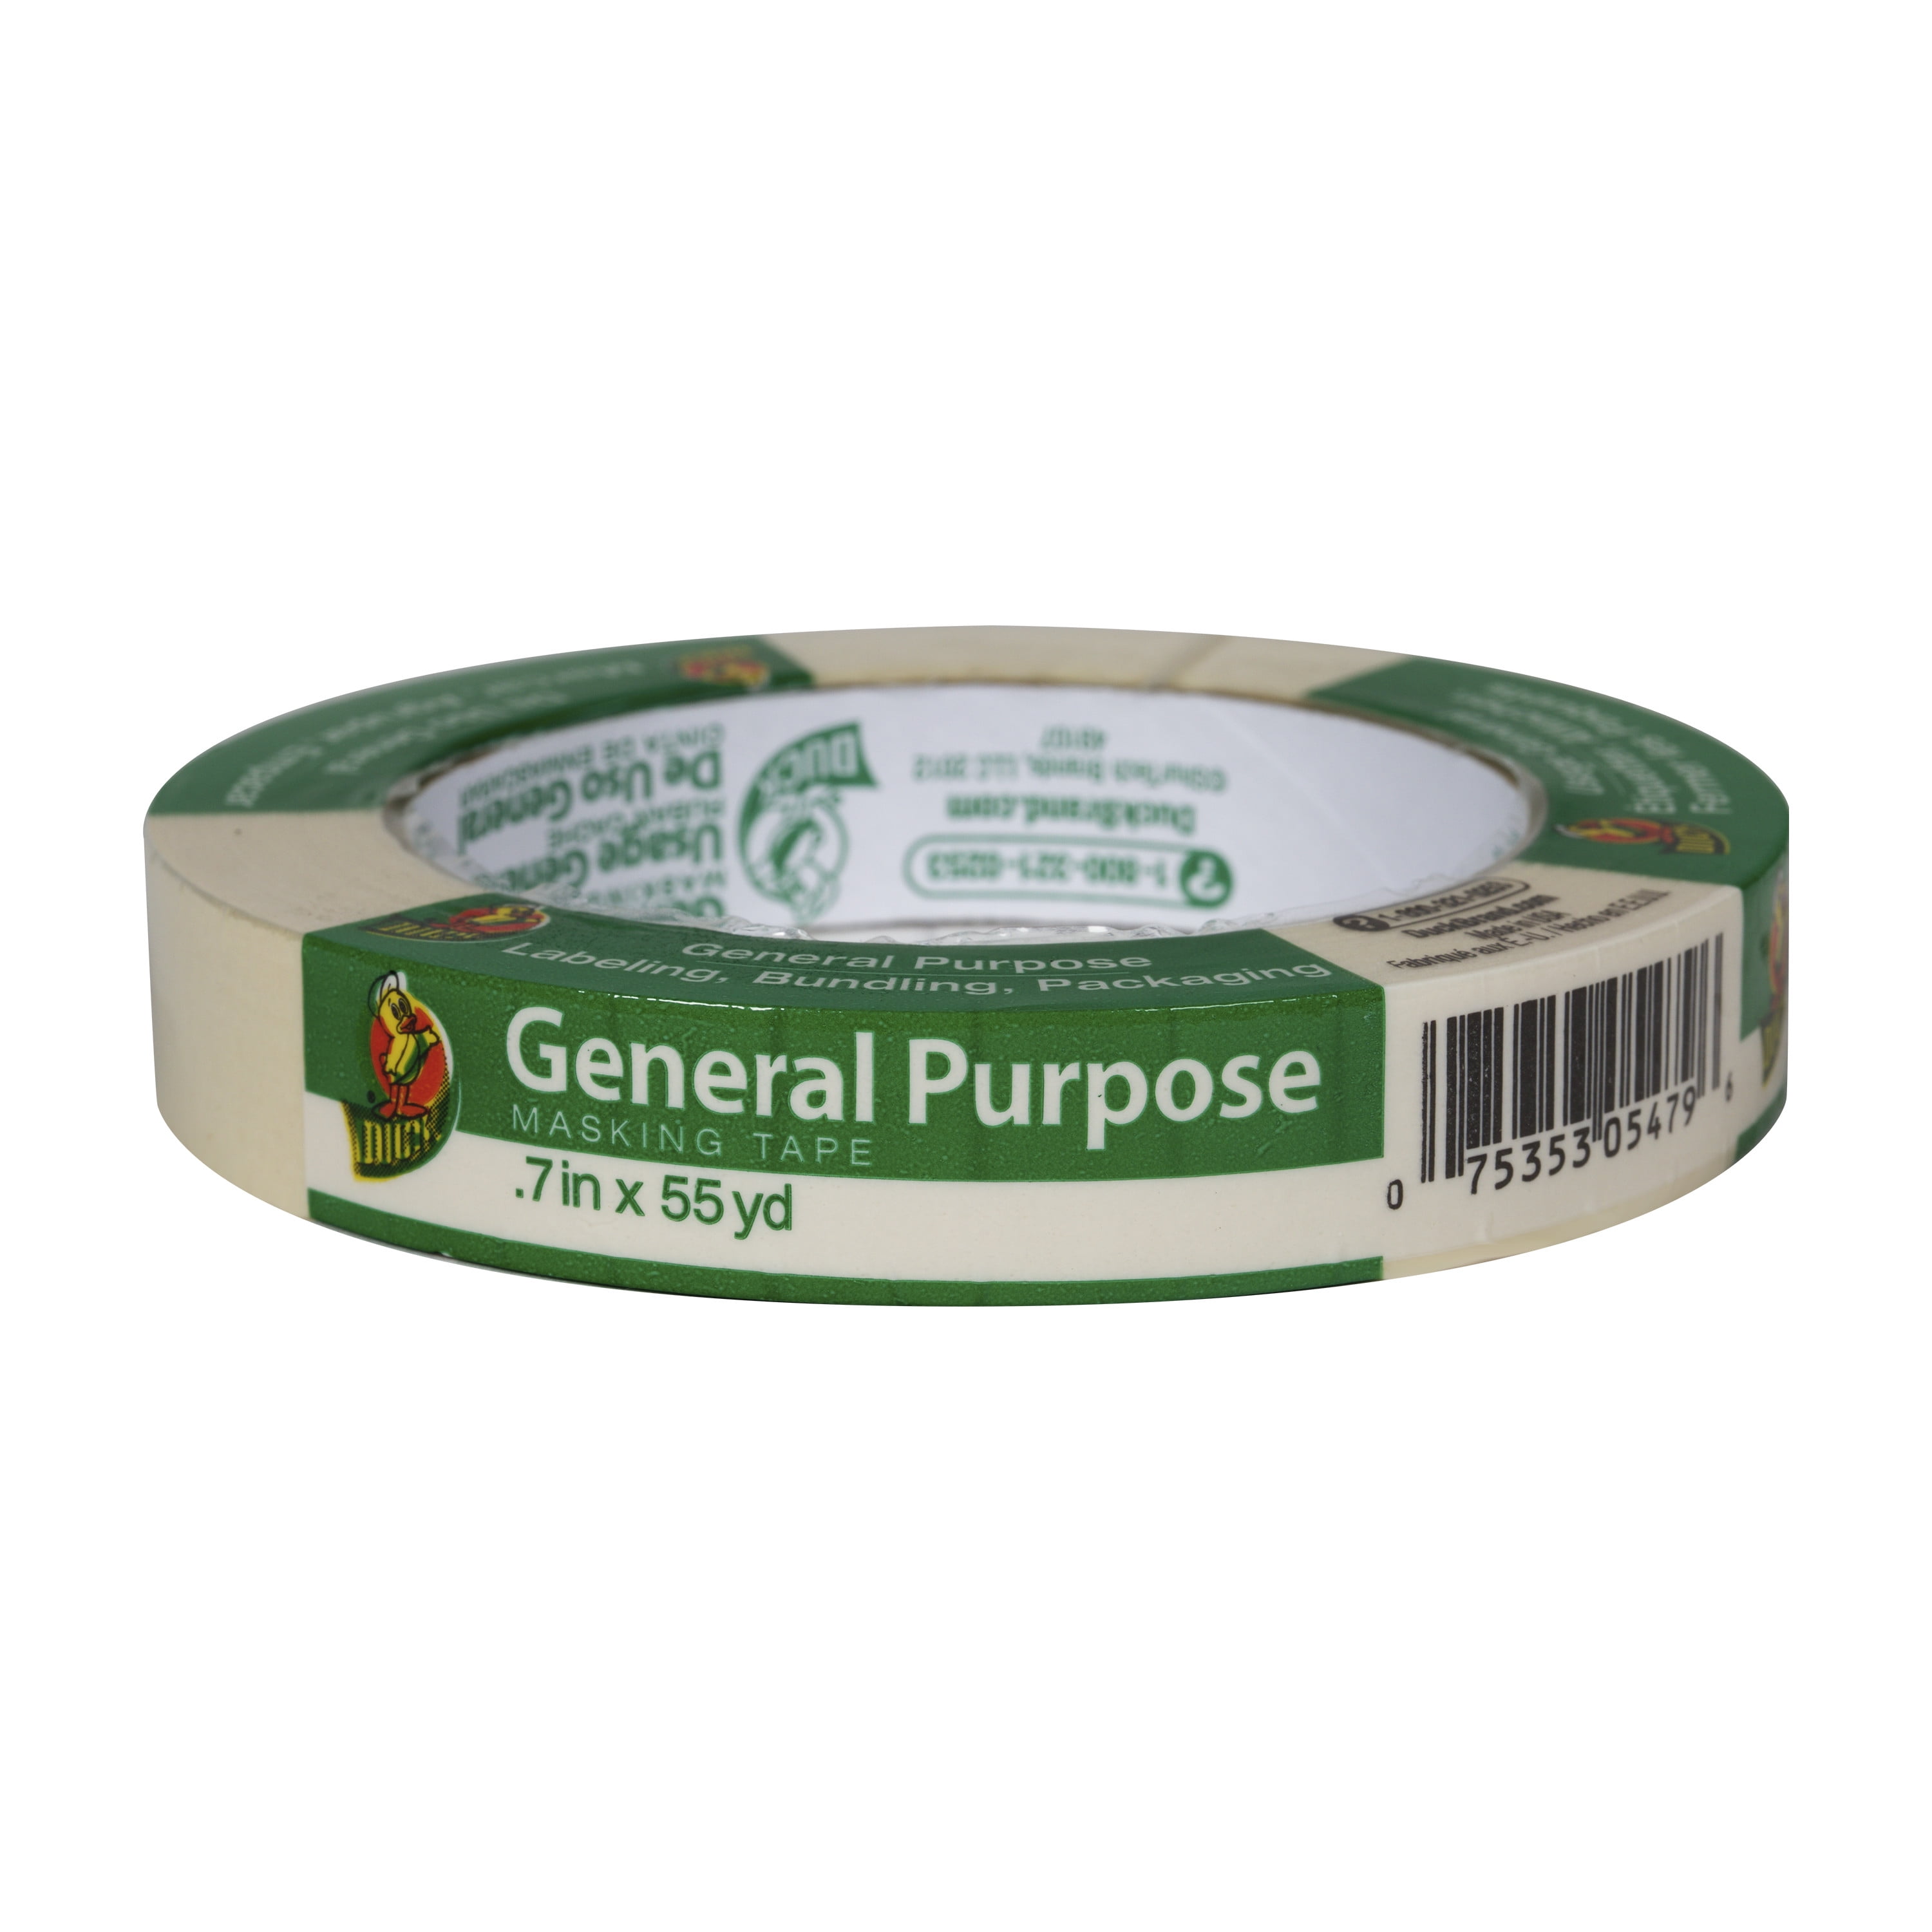 Duck General Purpose Masking Tape .70 in x 55 yards CECOMINOD021967